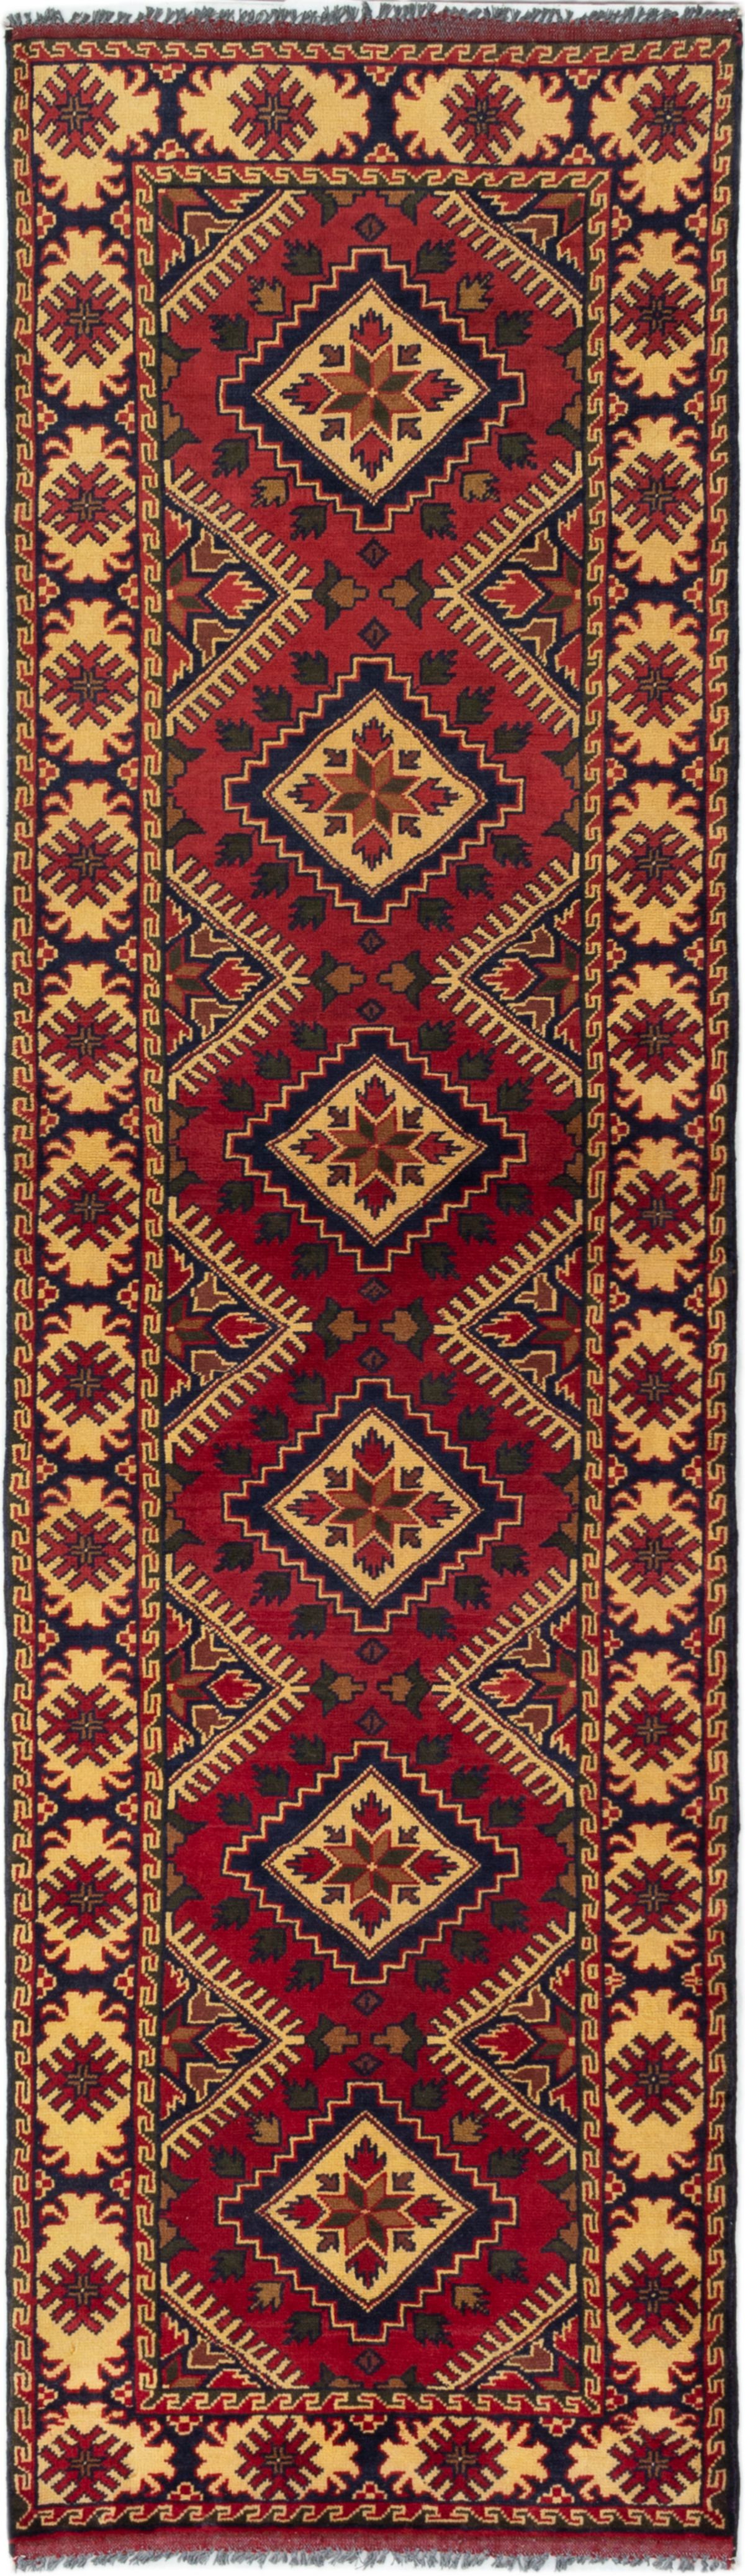 Hand-knotted Finest Kargahi Dark Red Wool Rug 2'8" x 9'9" Size: 2'8" x 9'9"  